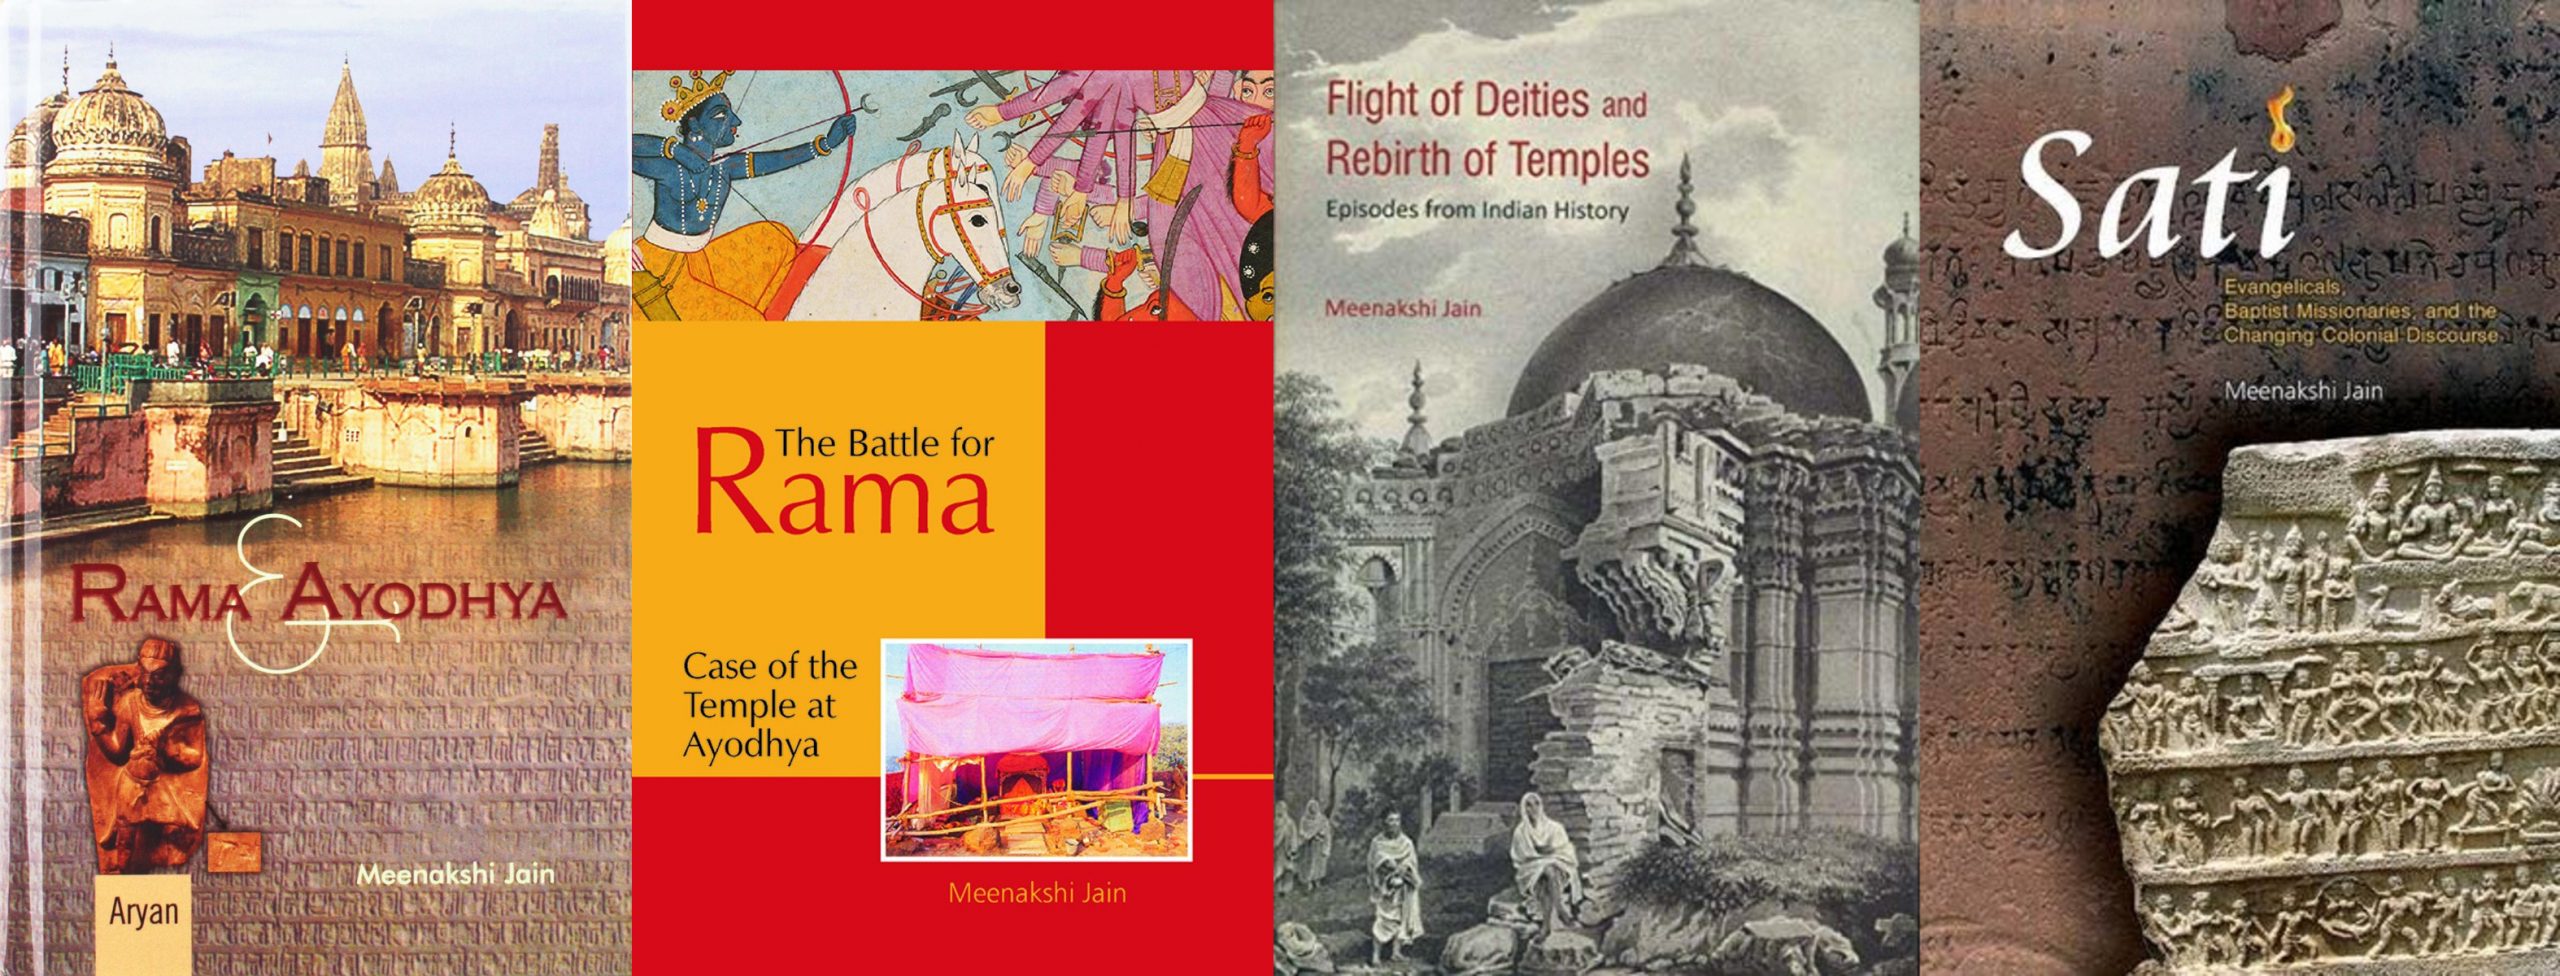 Meenakshi Jain Books